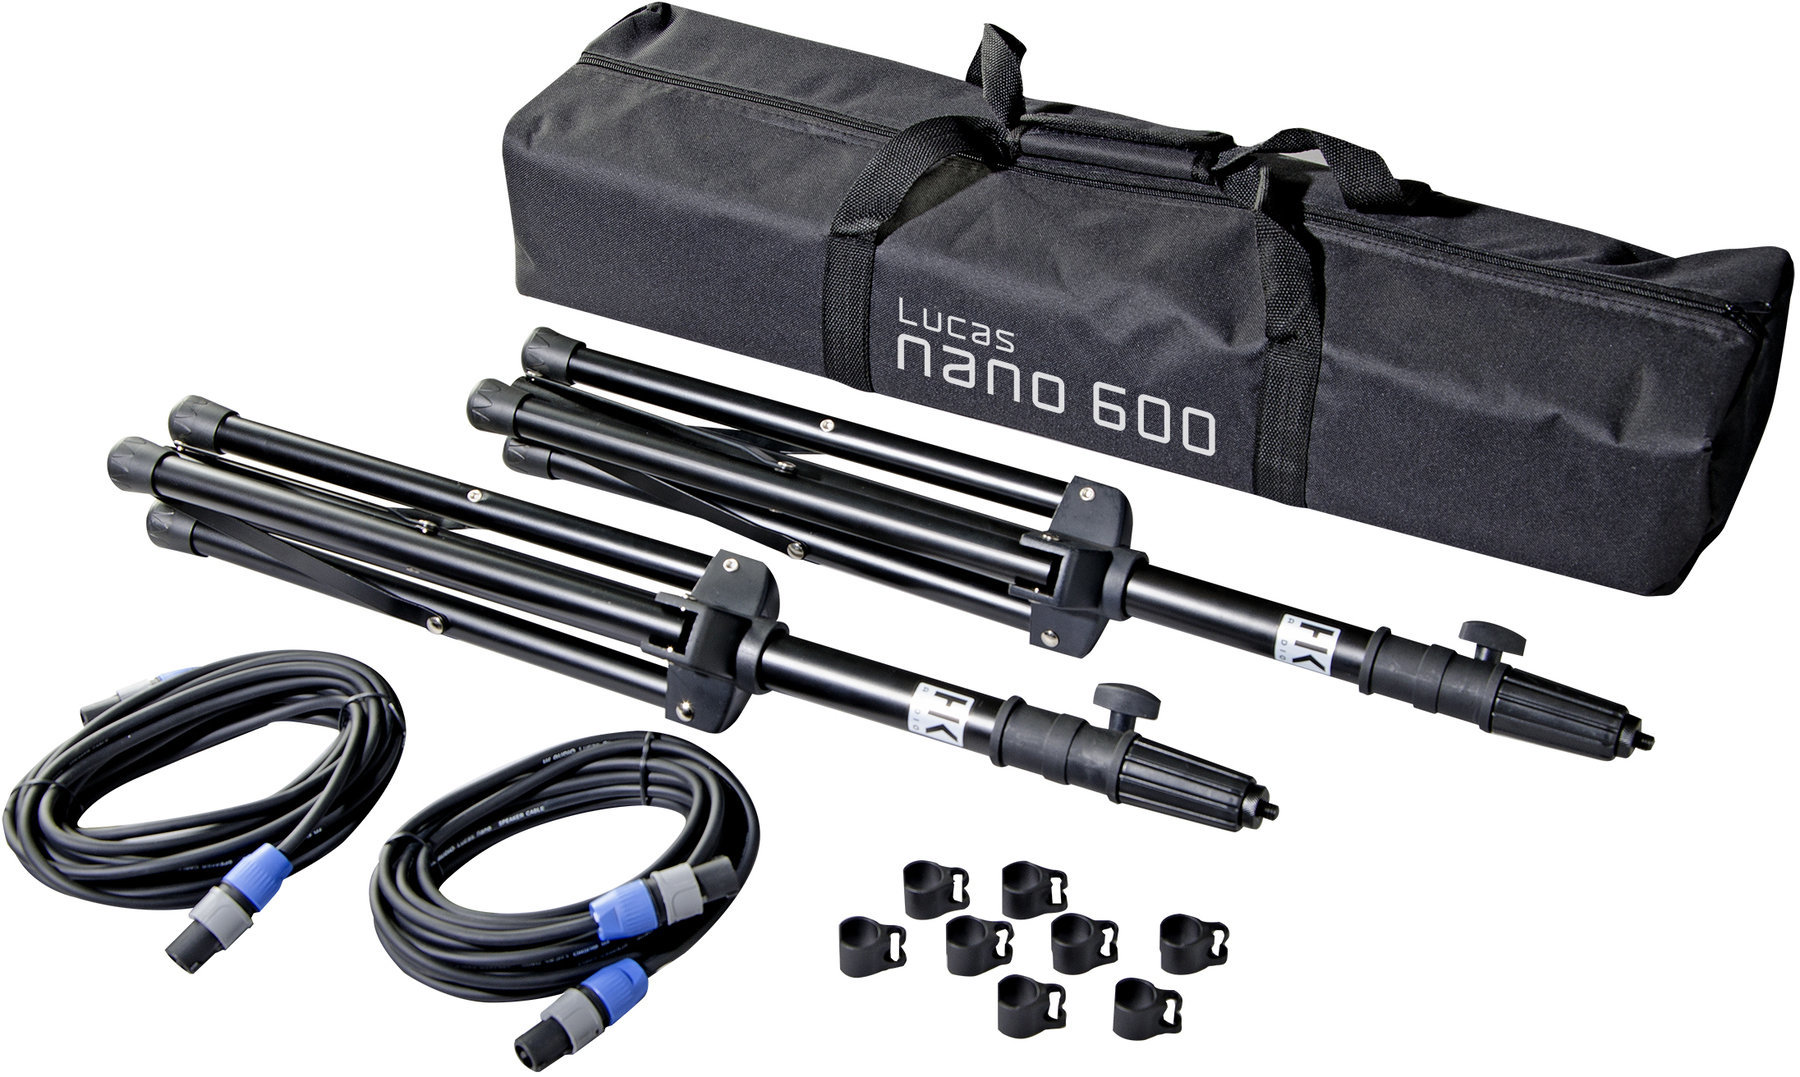 Telescopic speaker pole HK Audio L.U.C.A.S. NANO 600 Stereo Stand Add On